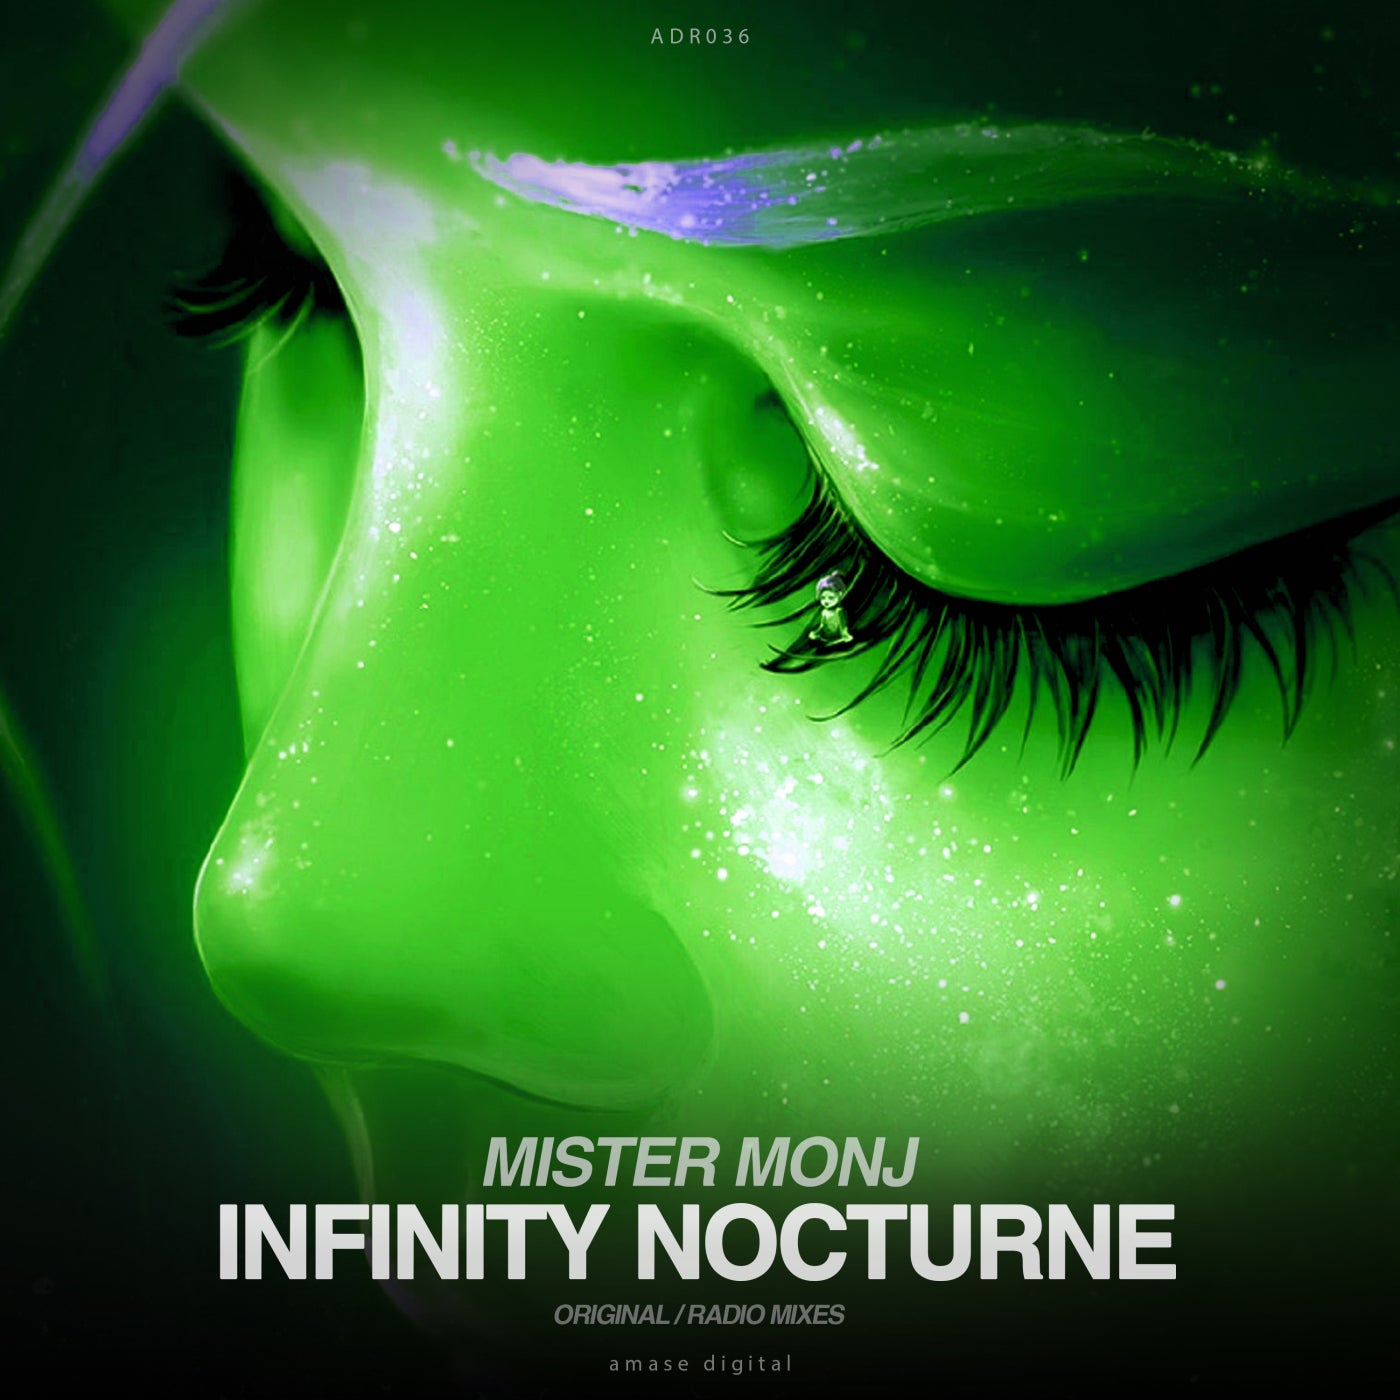 Mister Monj - Infinity Nocturne [ADR036]